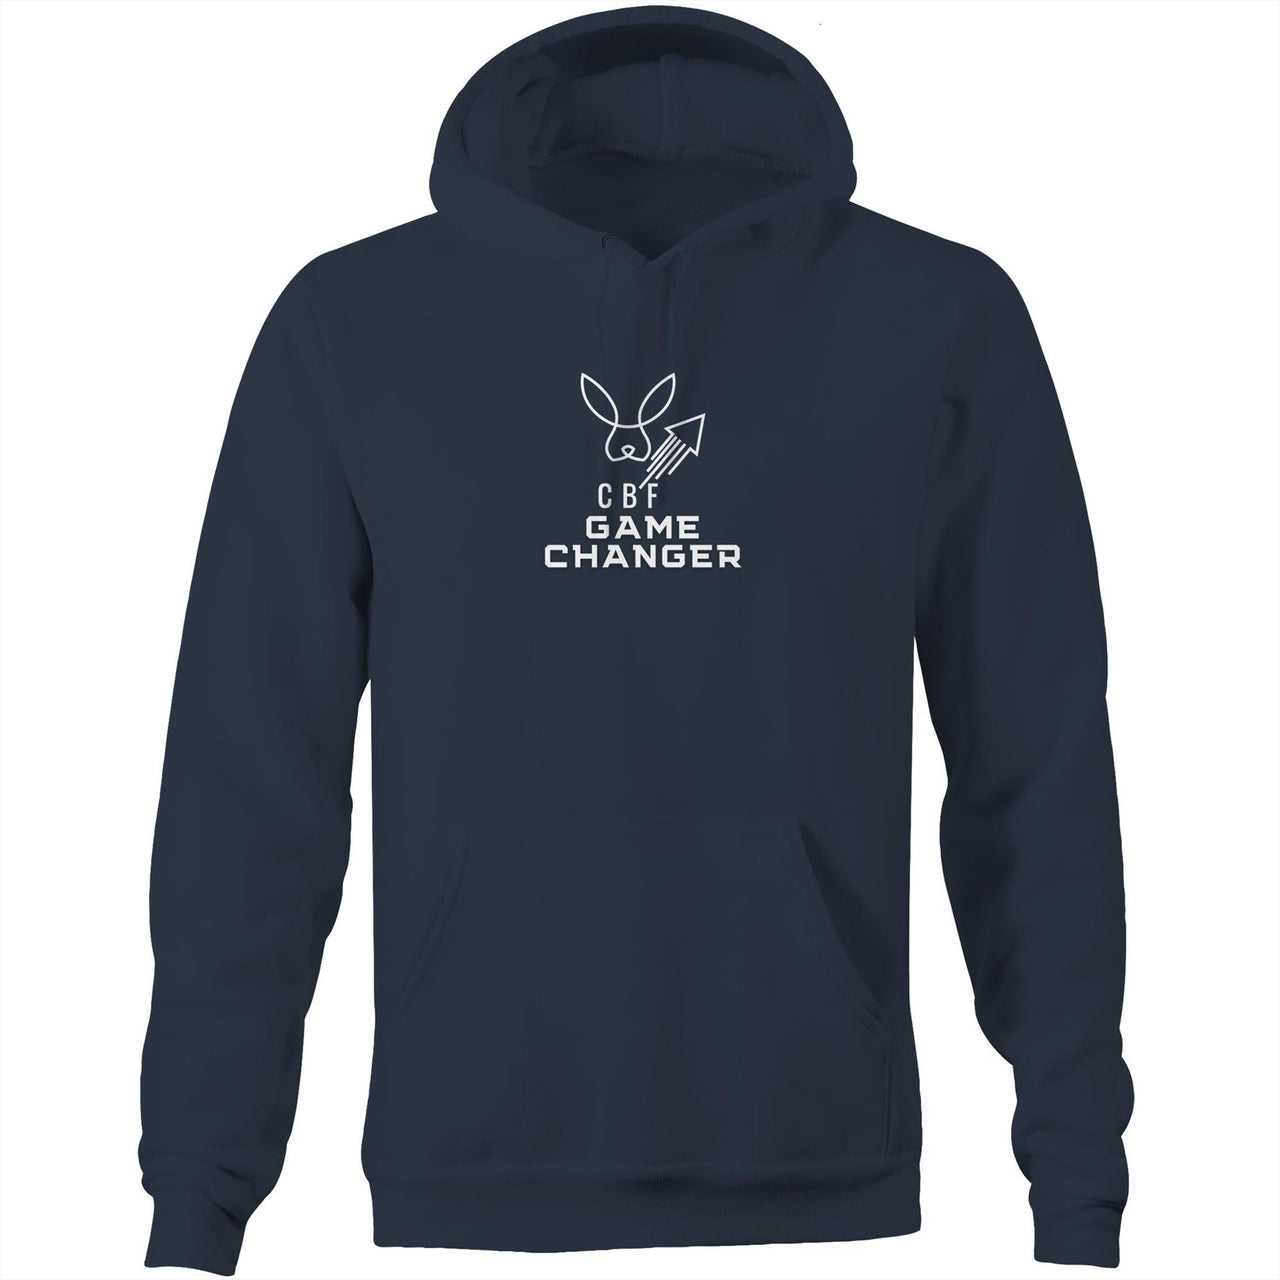 CBF Game Changer Rocket Pocket Hoodie Sweatshirt Navy by CBF Clothing